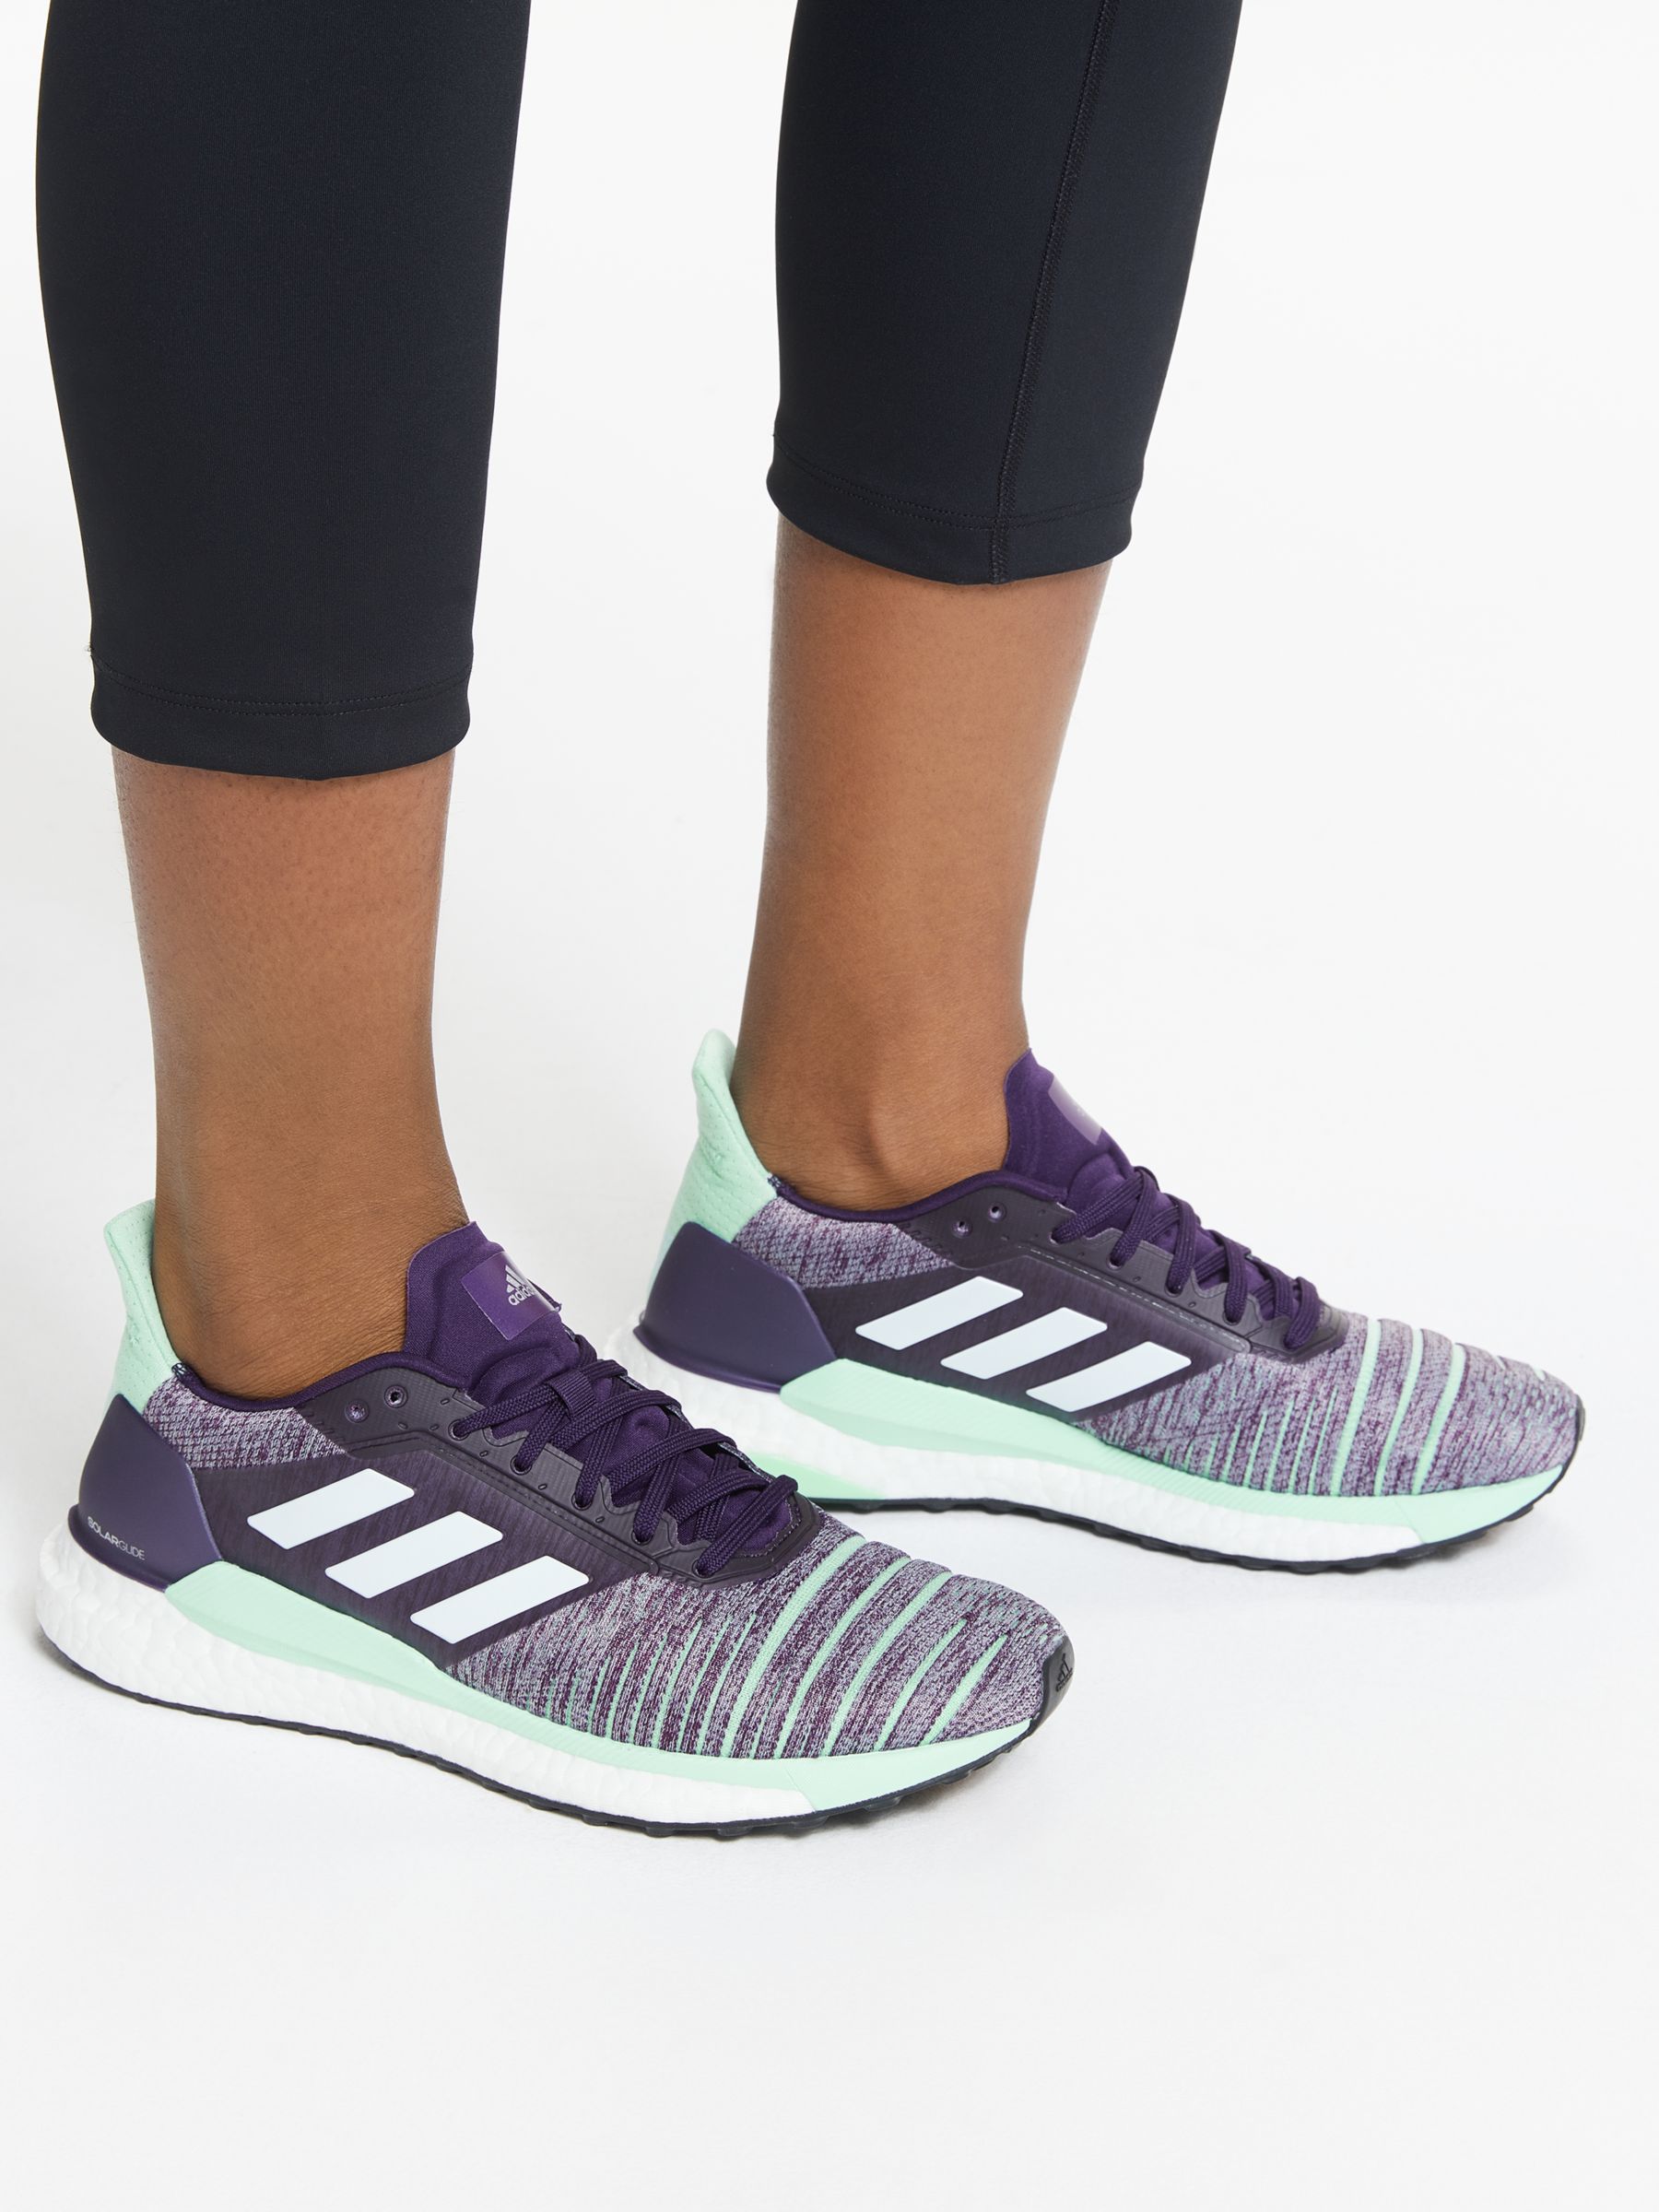 adidas solar glide women's running shoes